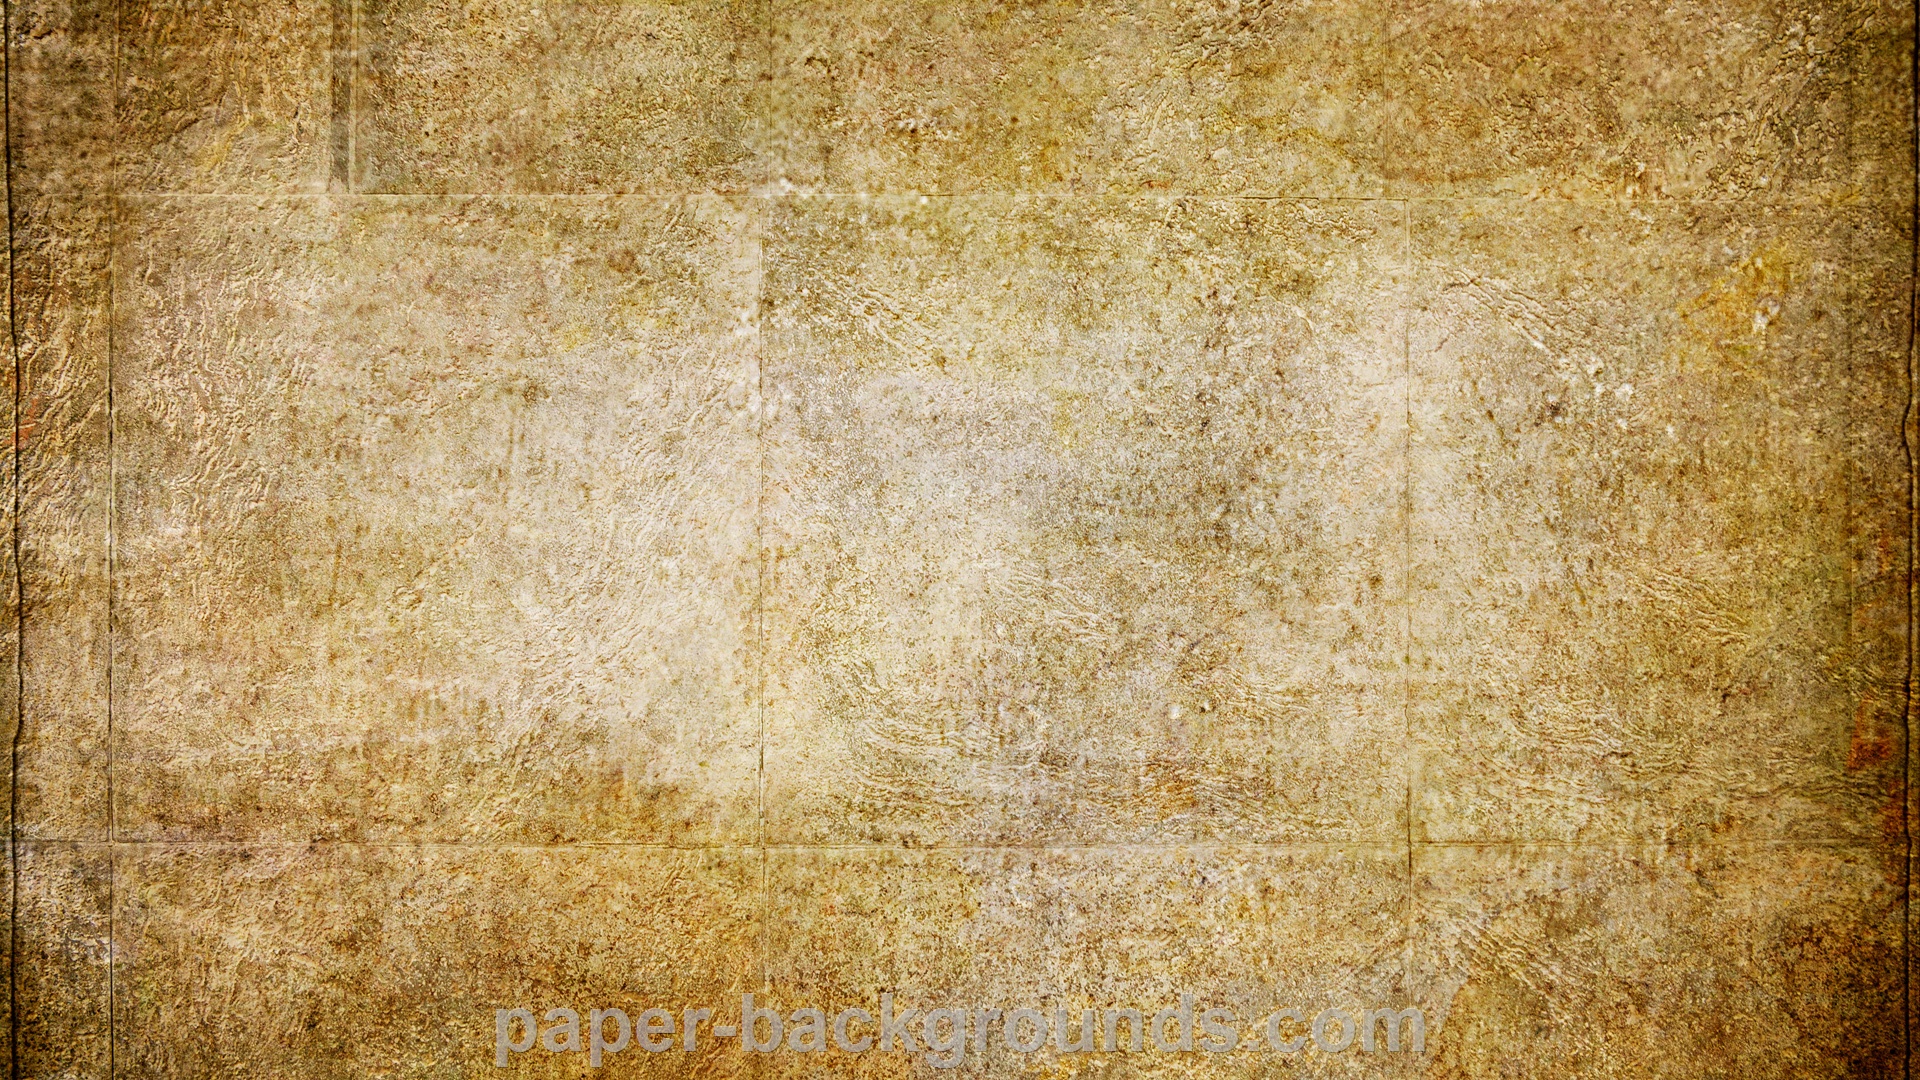  Grunge Wall Texture Paper Wallpaper 1920x1080 Full HD Wallpapers